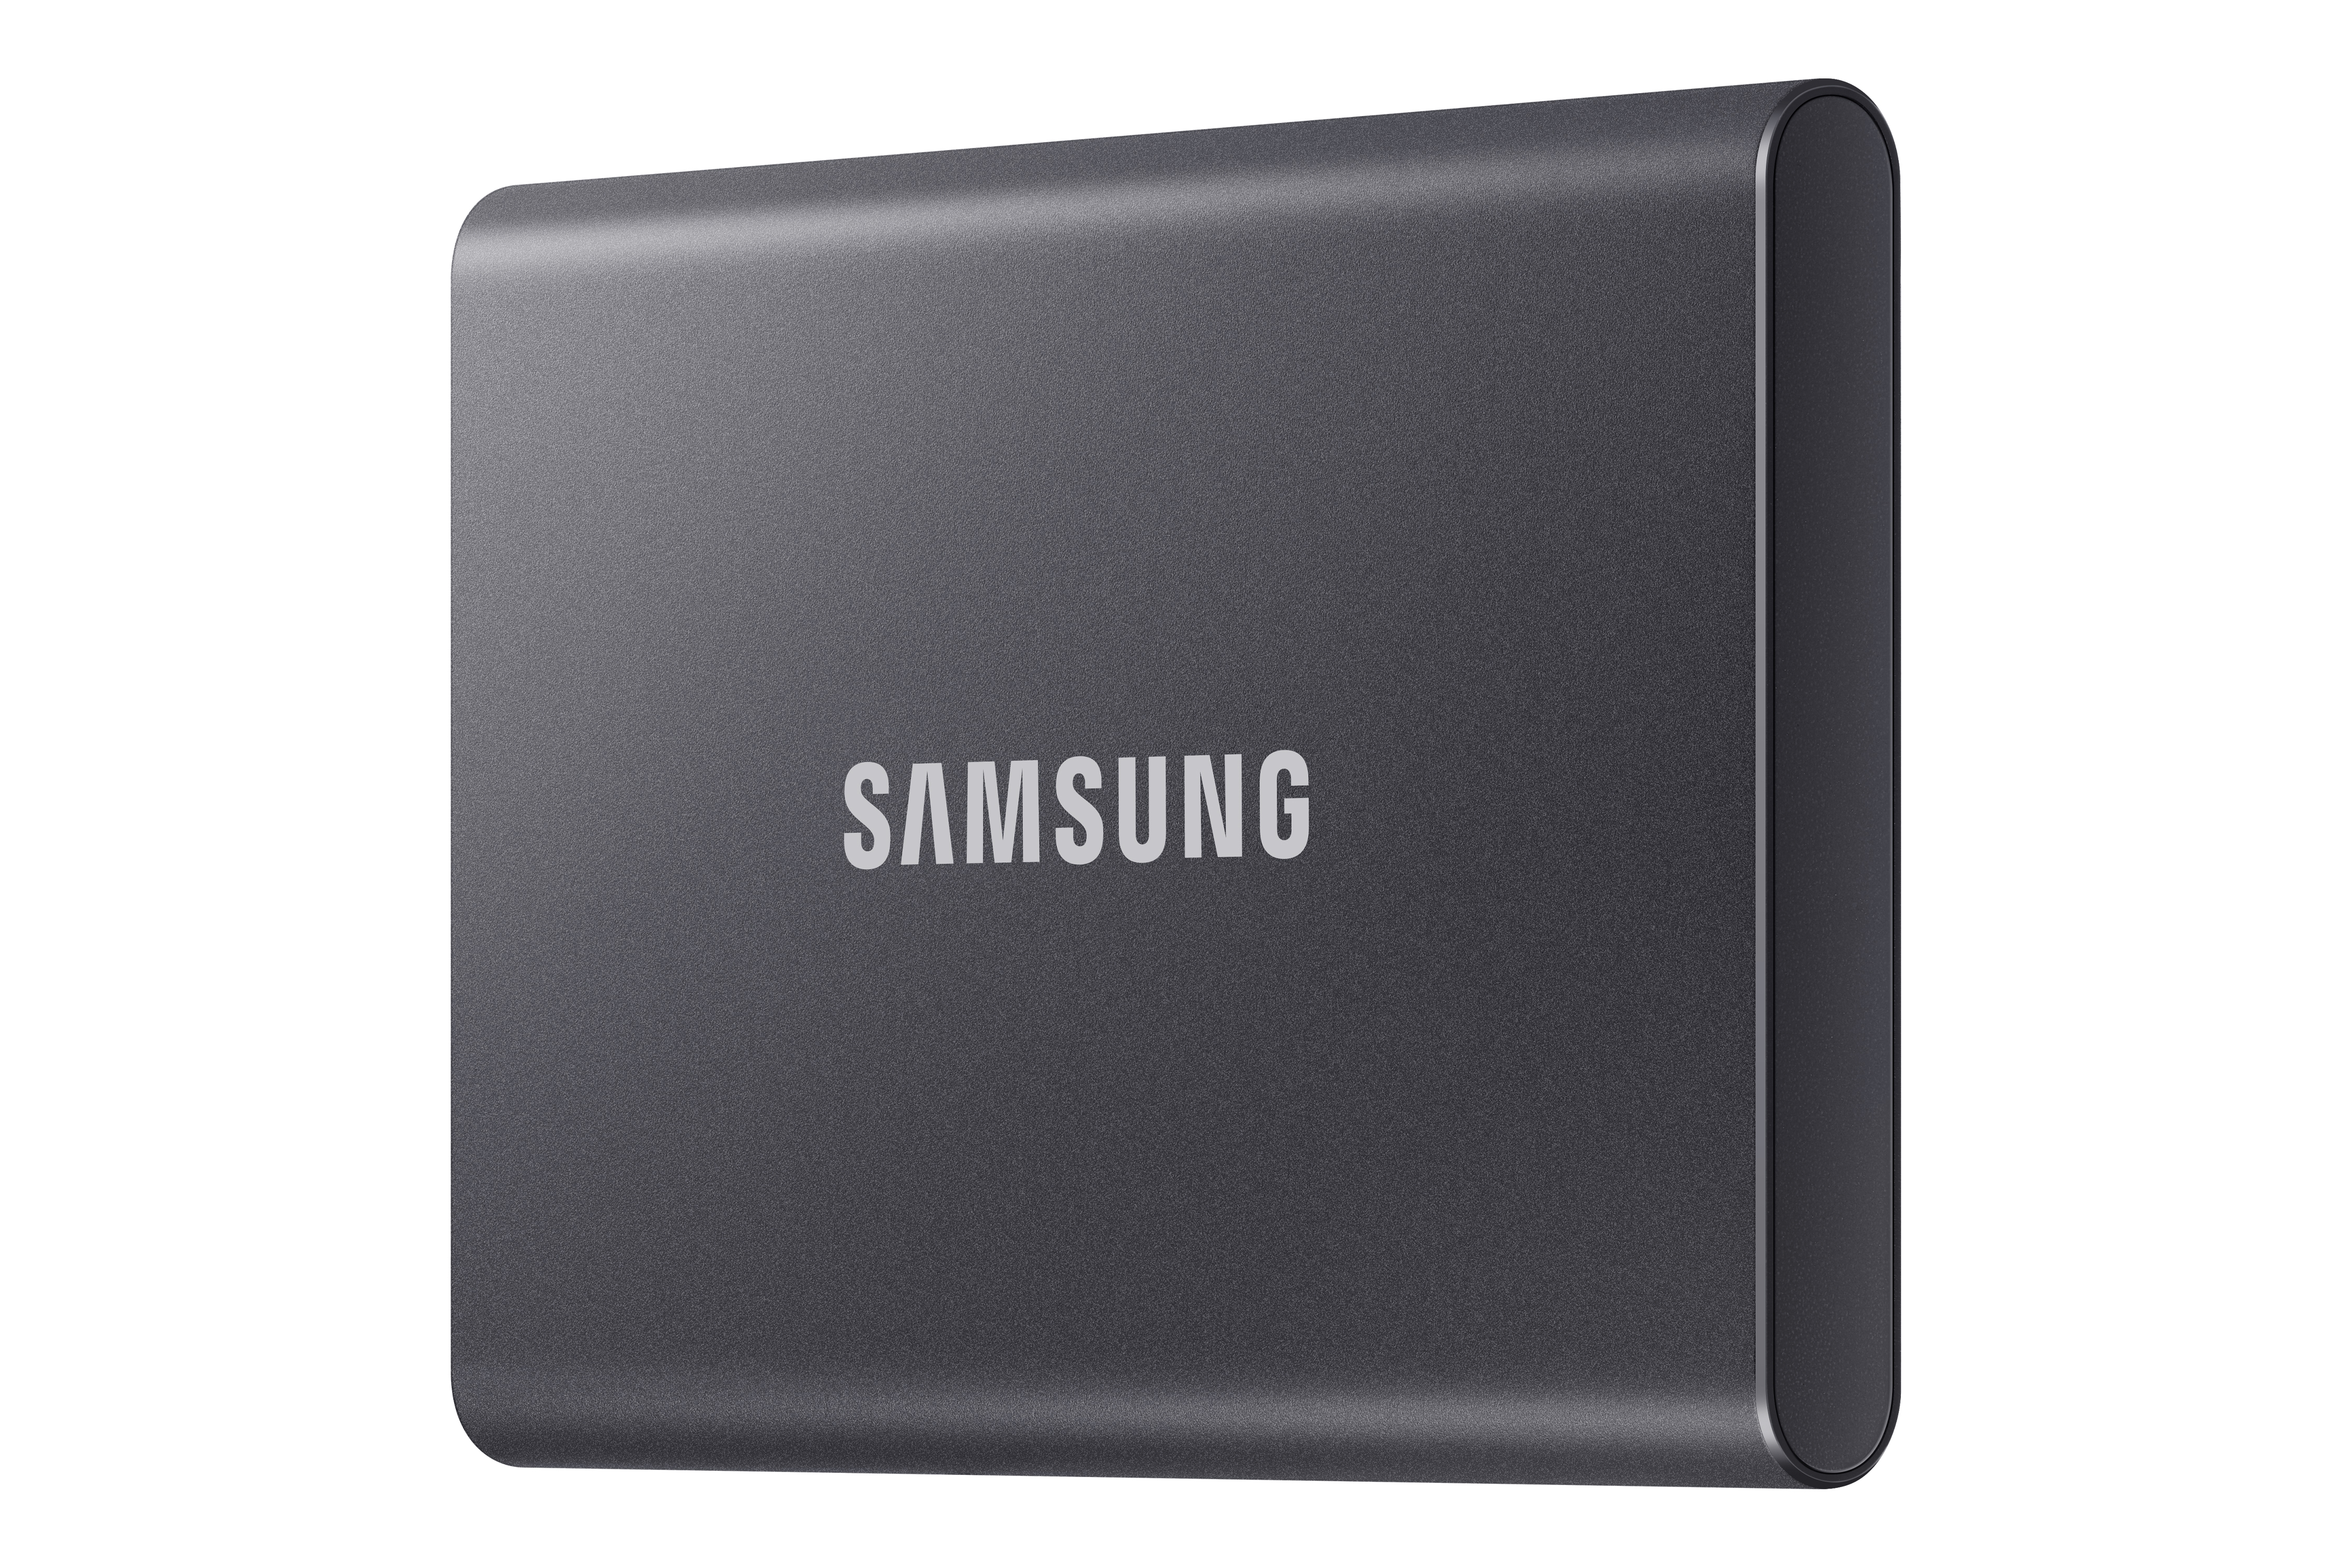 Thumbnail image of Portable SSD T7 USB 3.2 2TB (Gray)